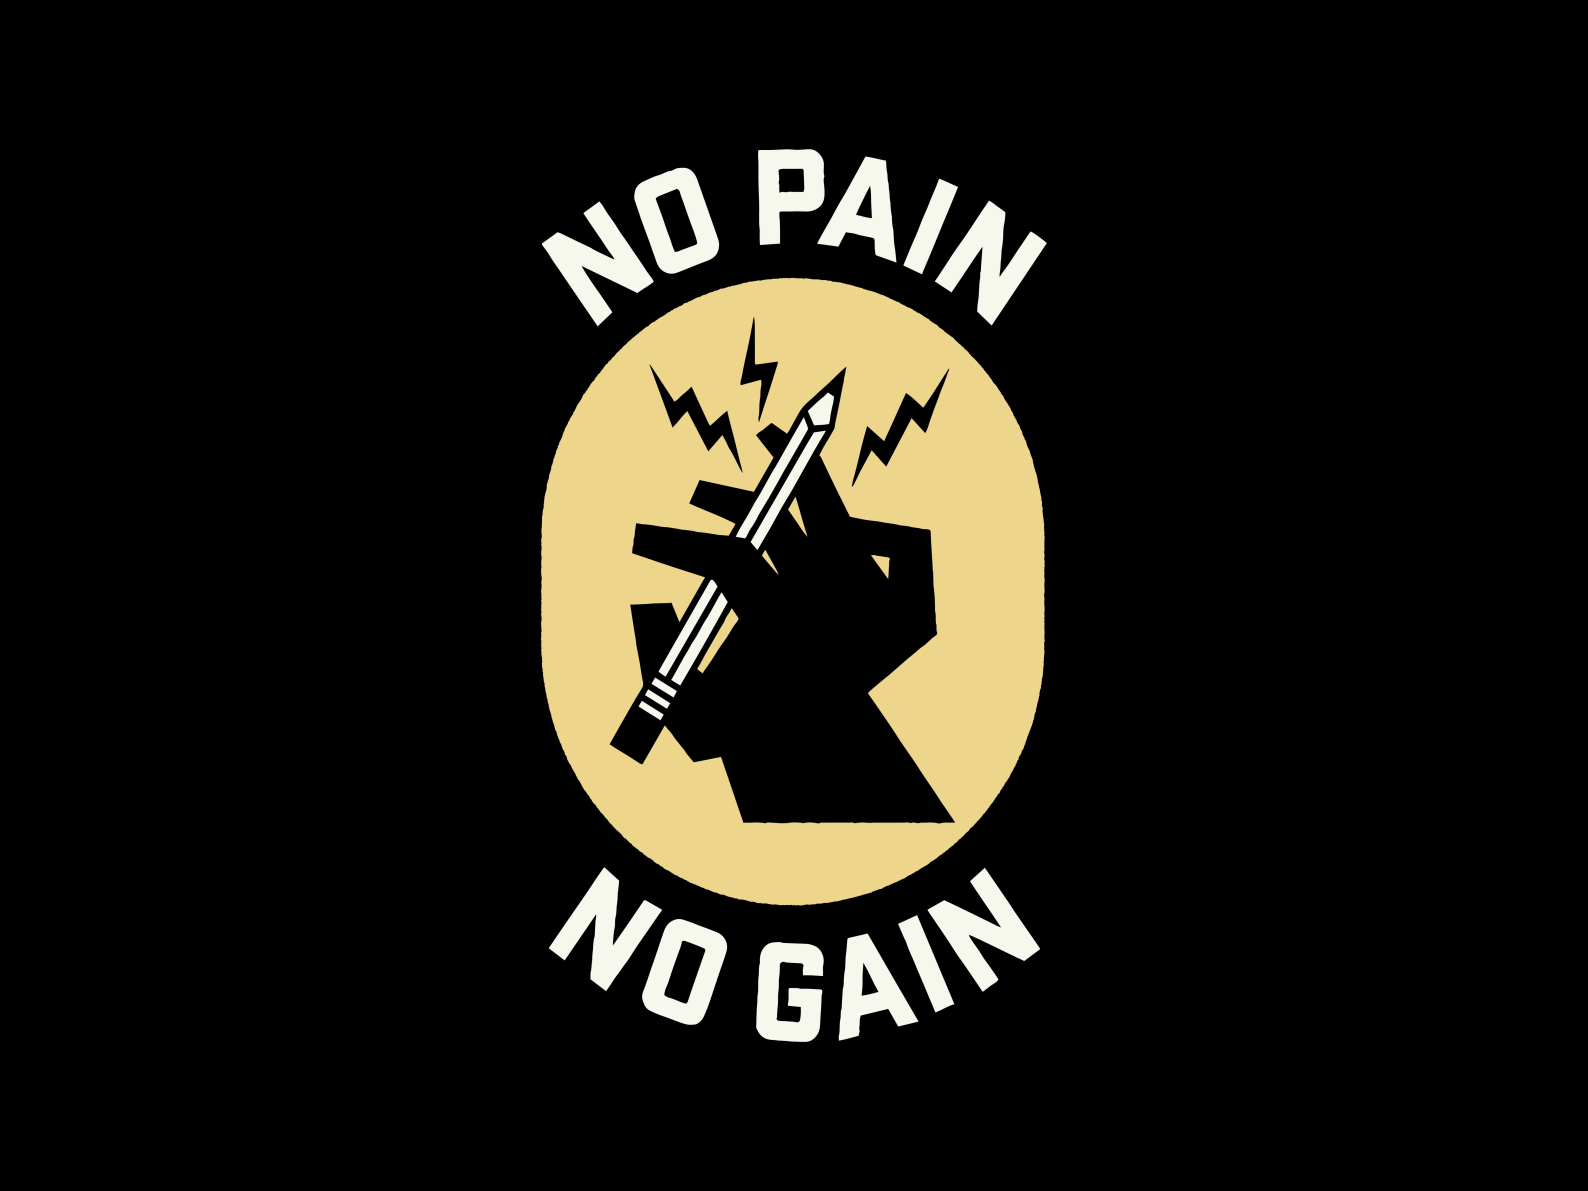 No pain no gain æ„�æ€�